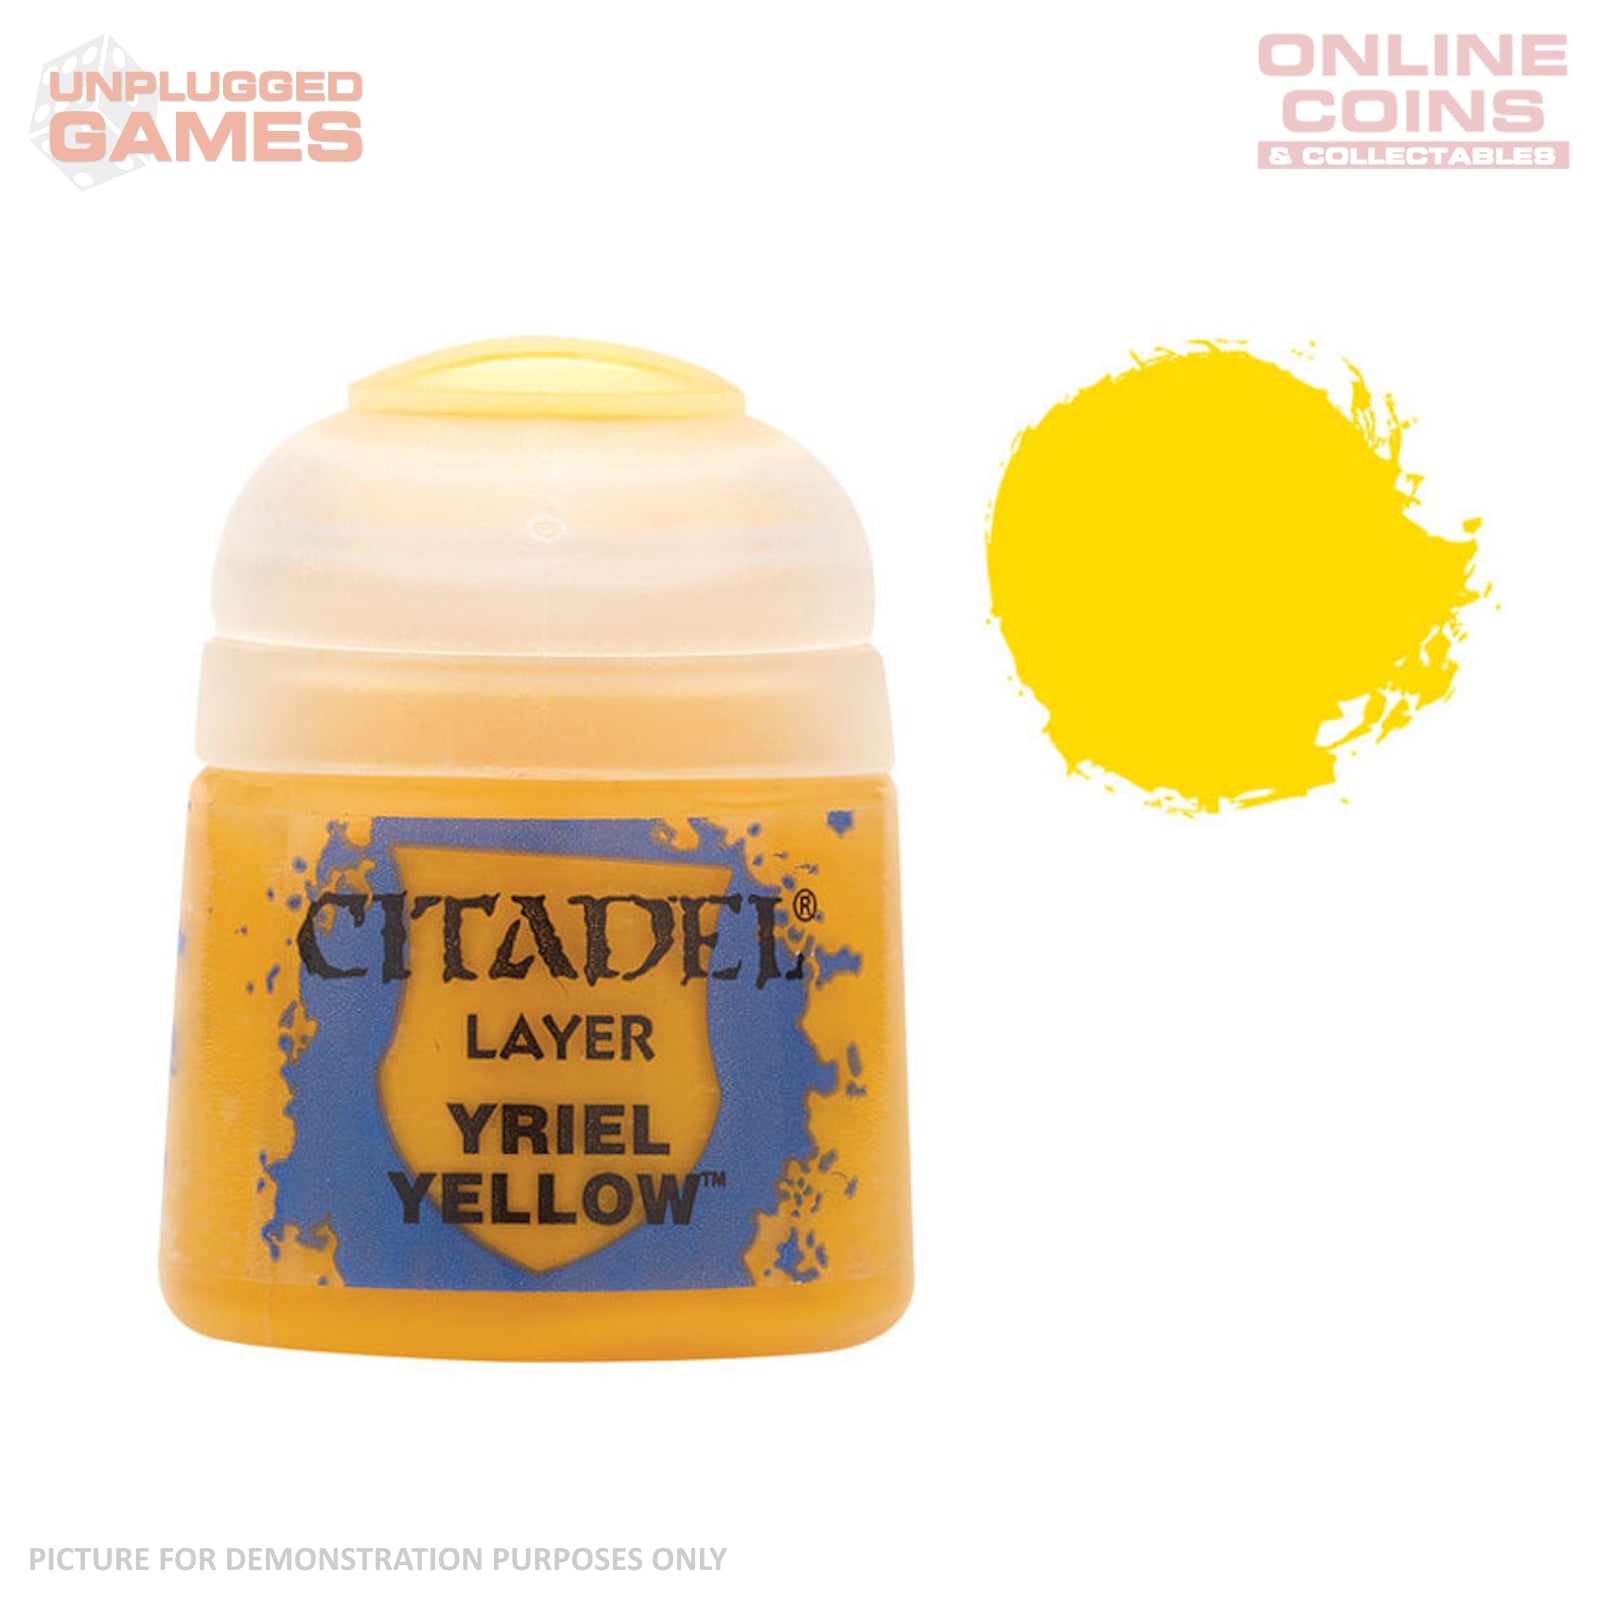 Citadel Layer - 22-01 Yriel Yellow